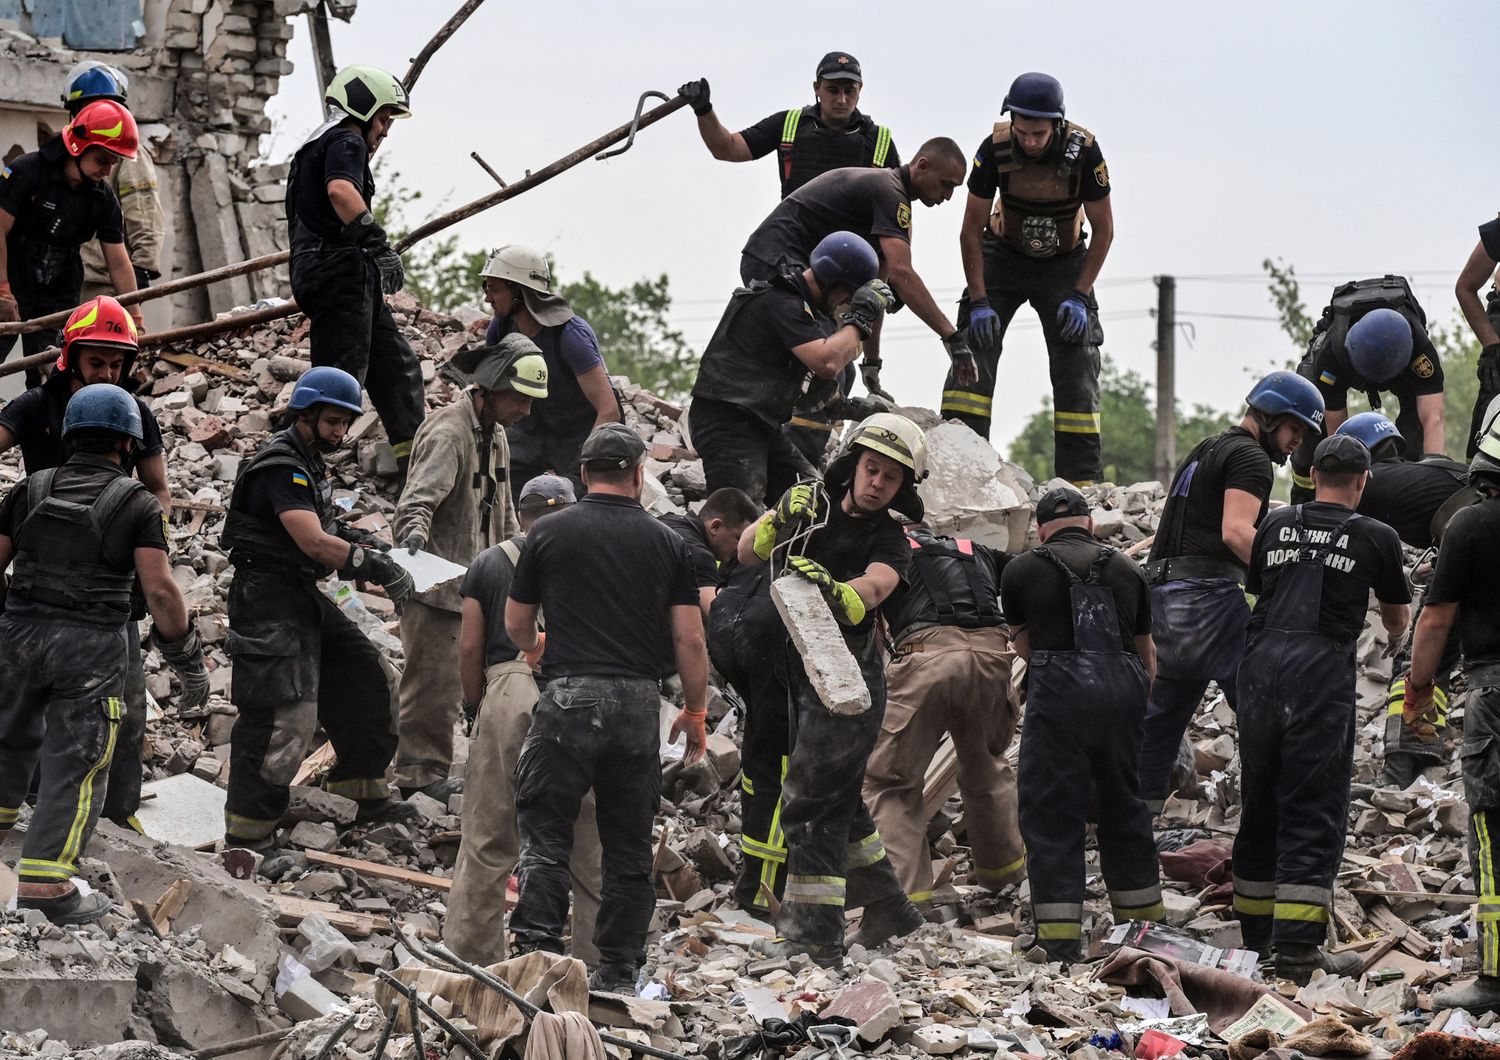 ucraina guerra missili donetsk crollo palazzo morti macerie